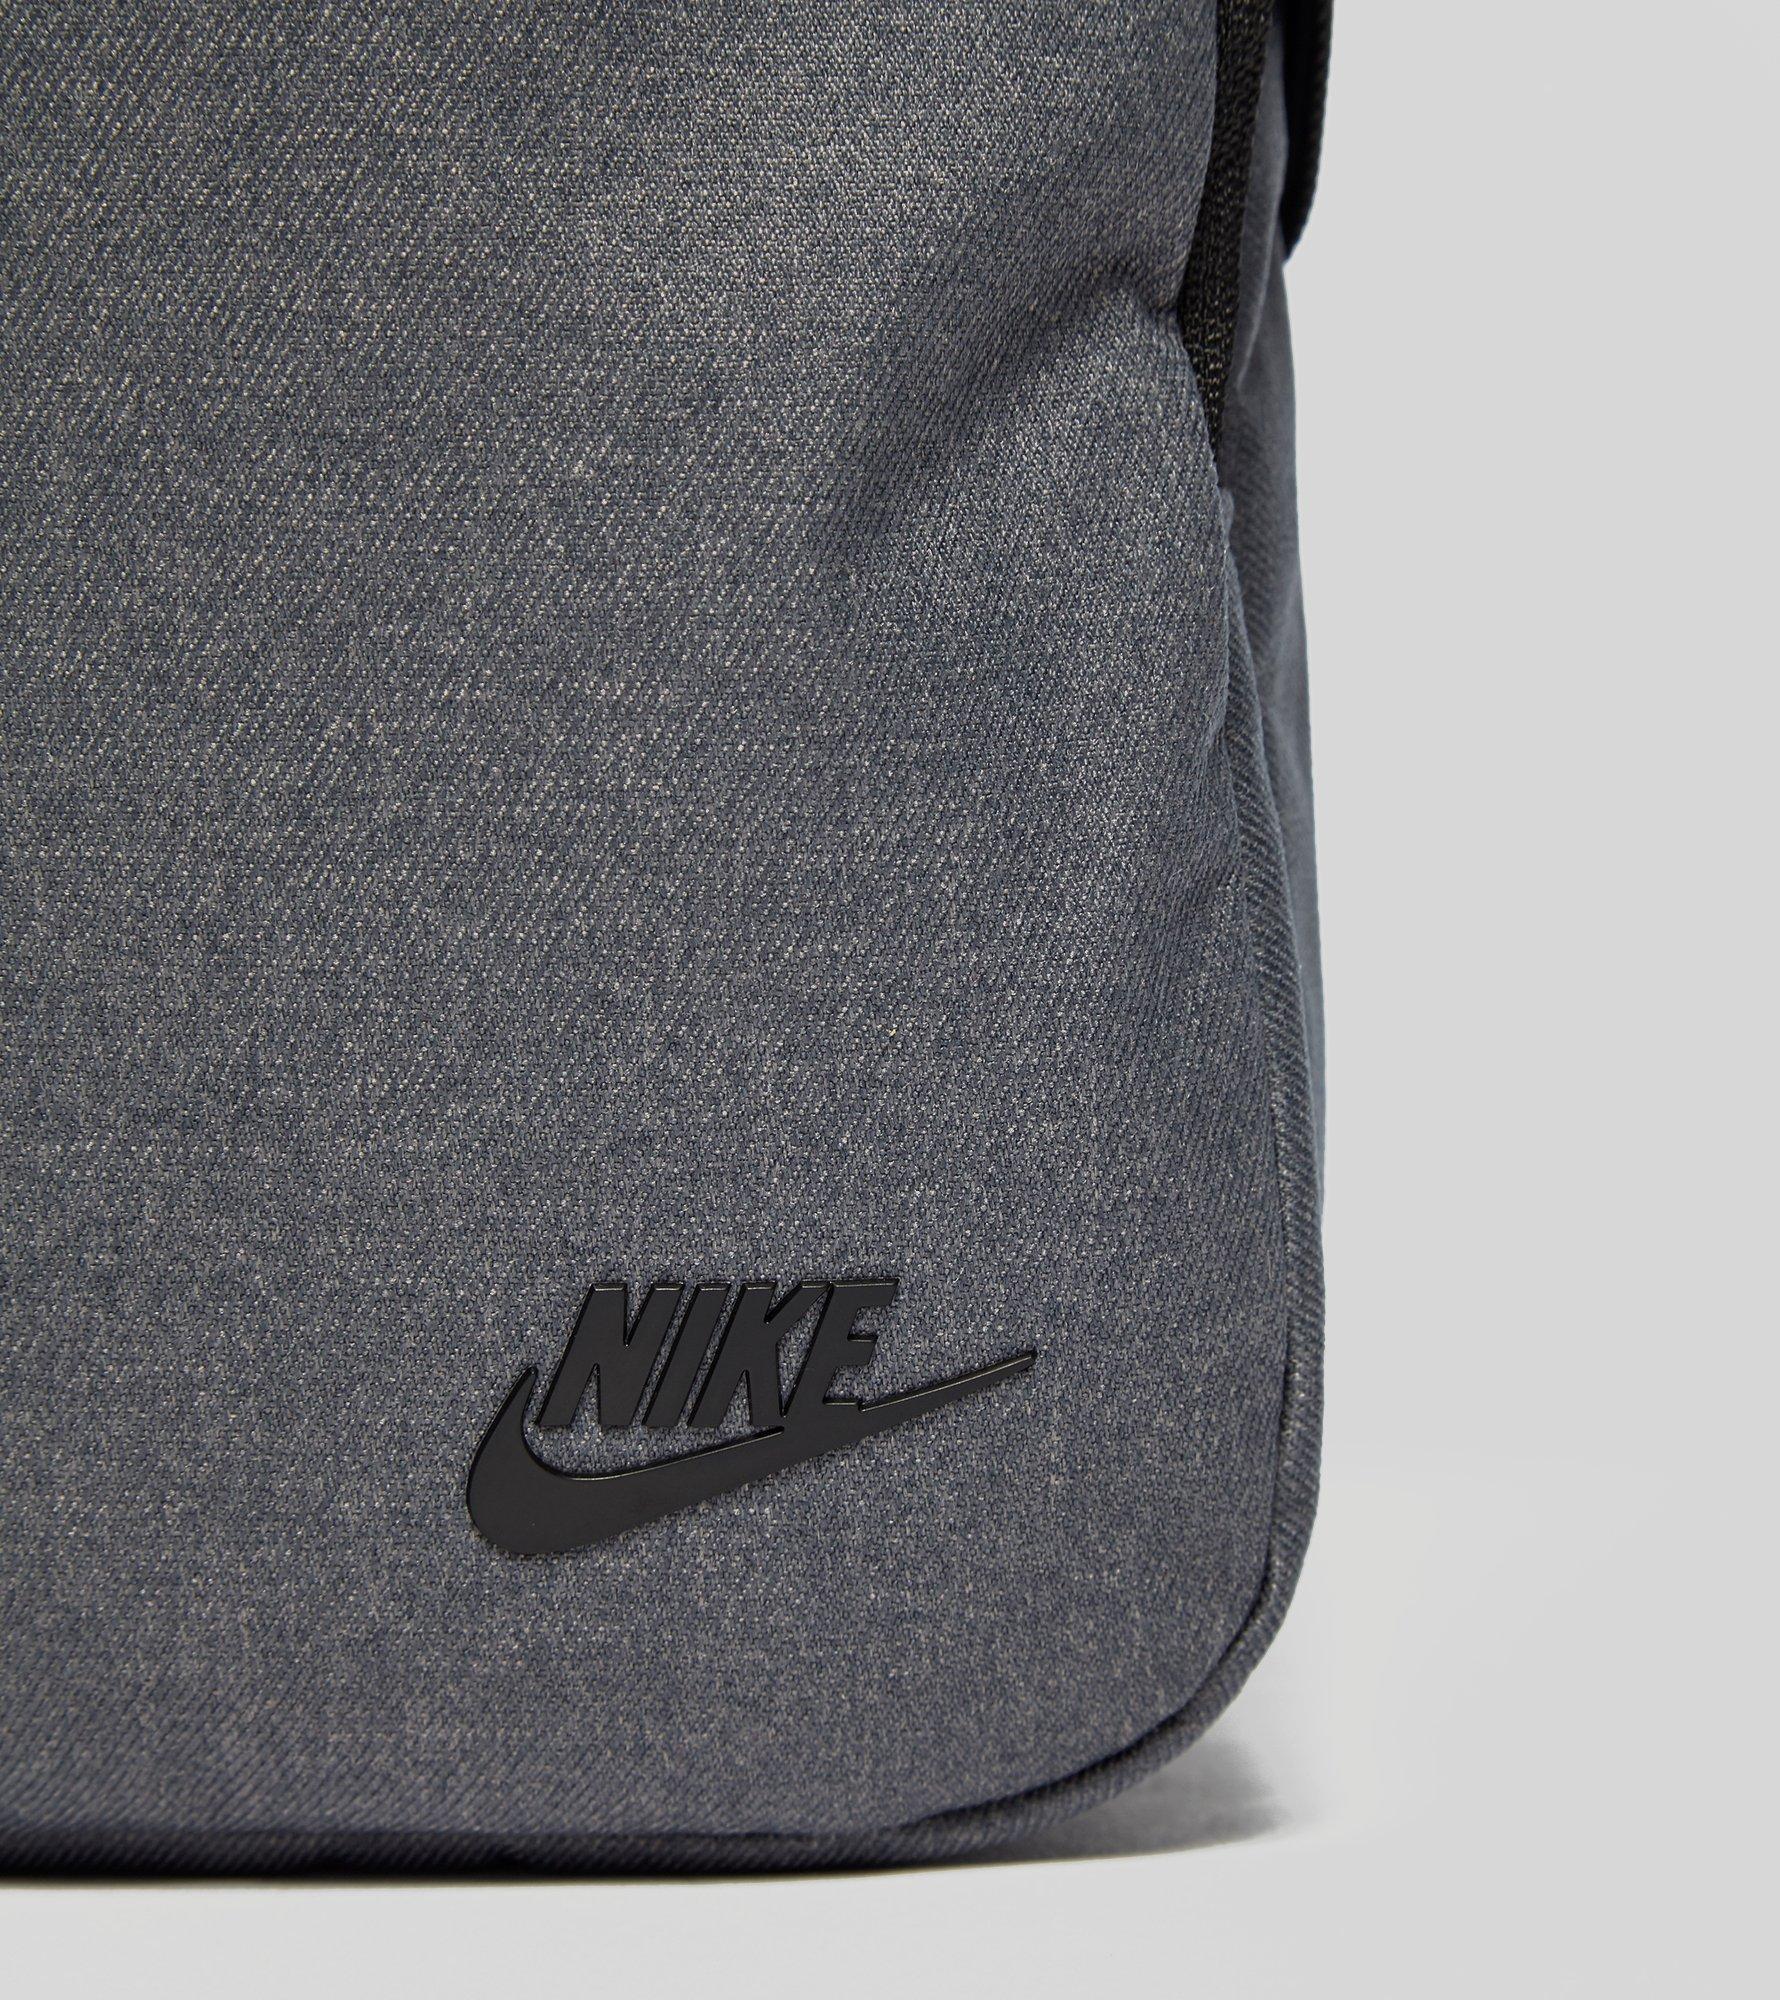 Nike Synthetic Core Small Crossbody Bag in Dark Grey (Gray) for Men - Lyst